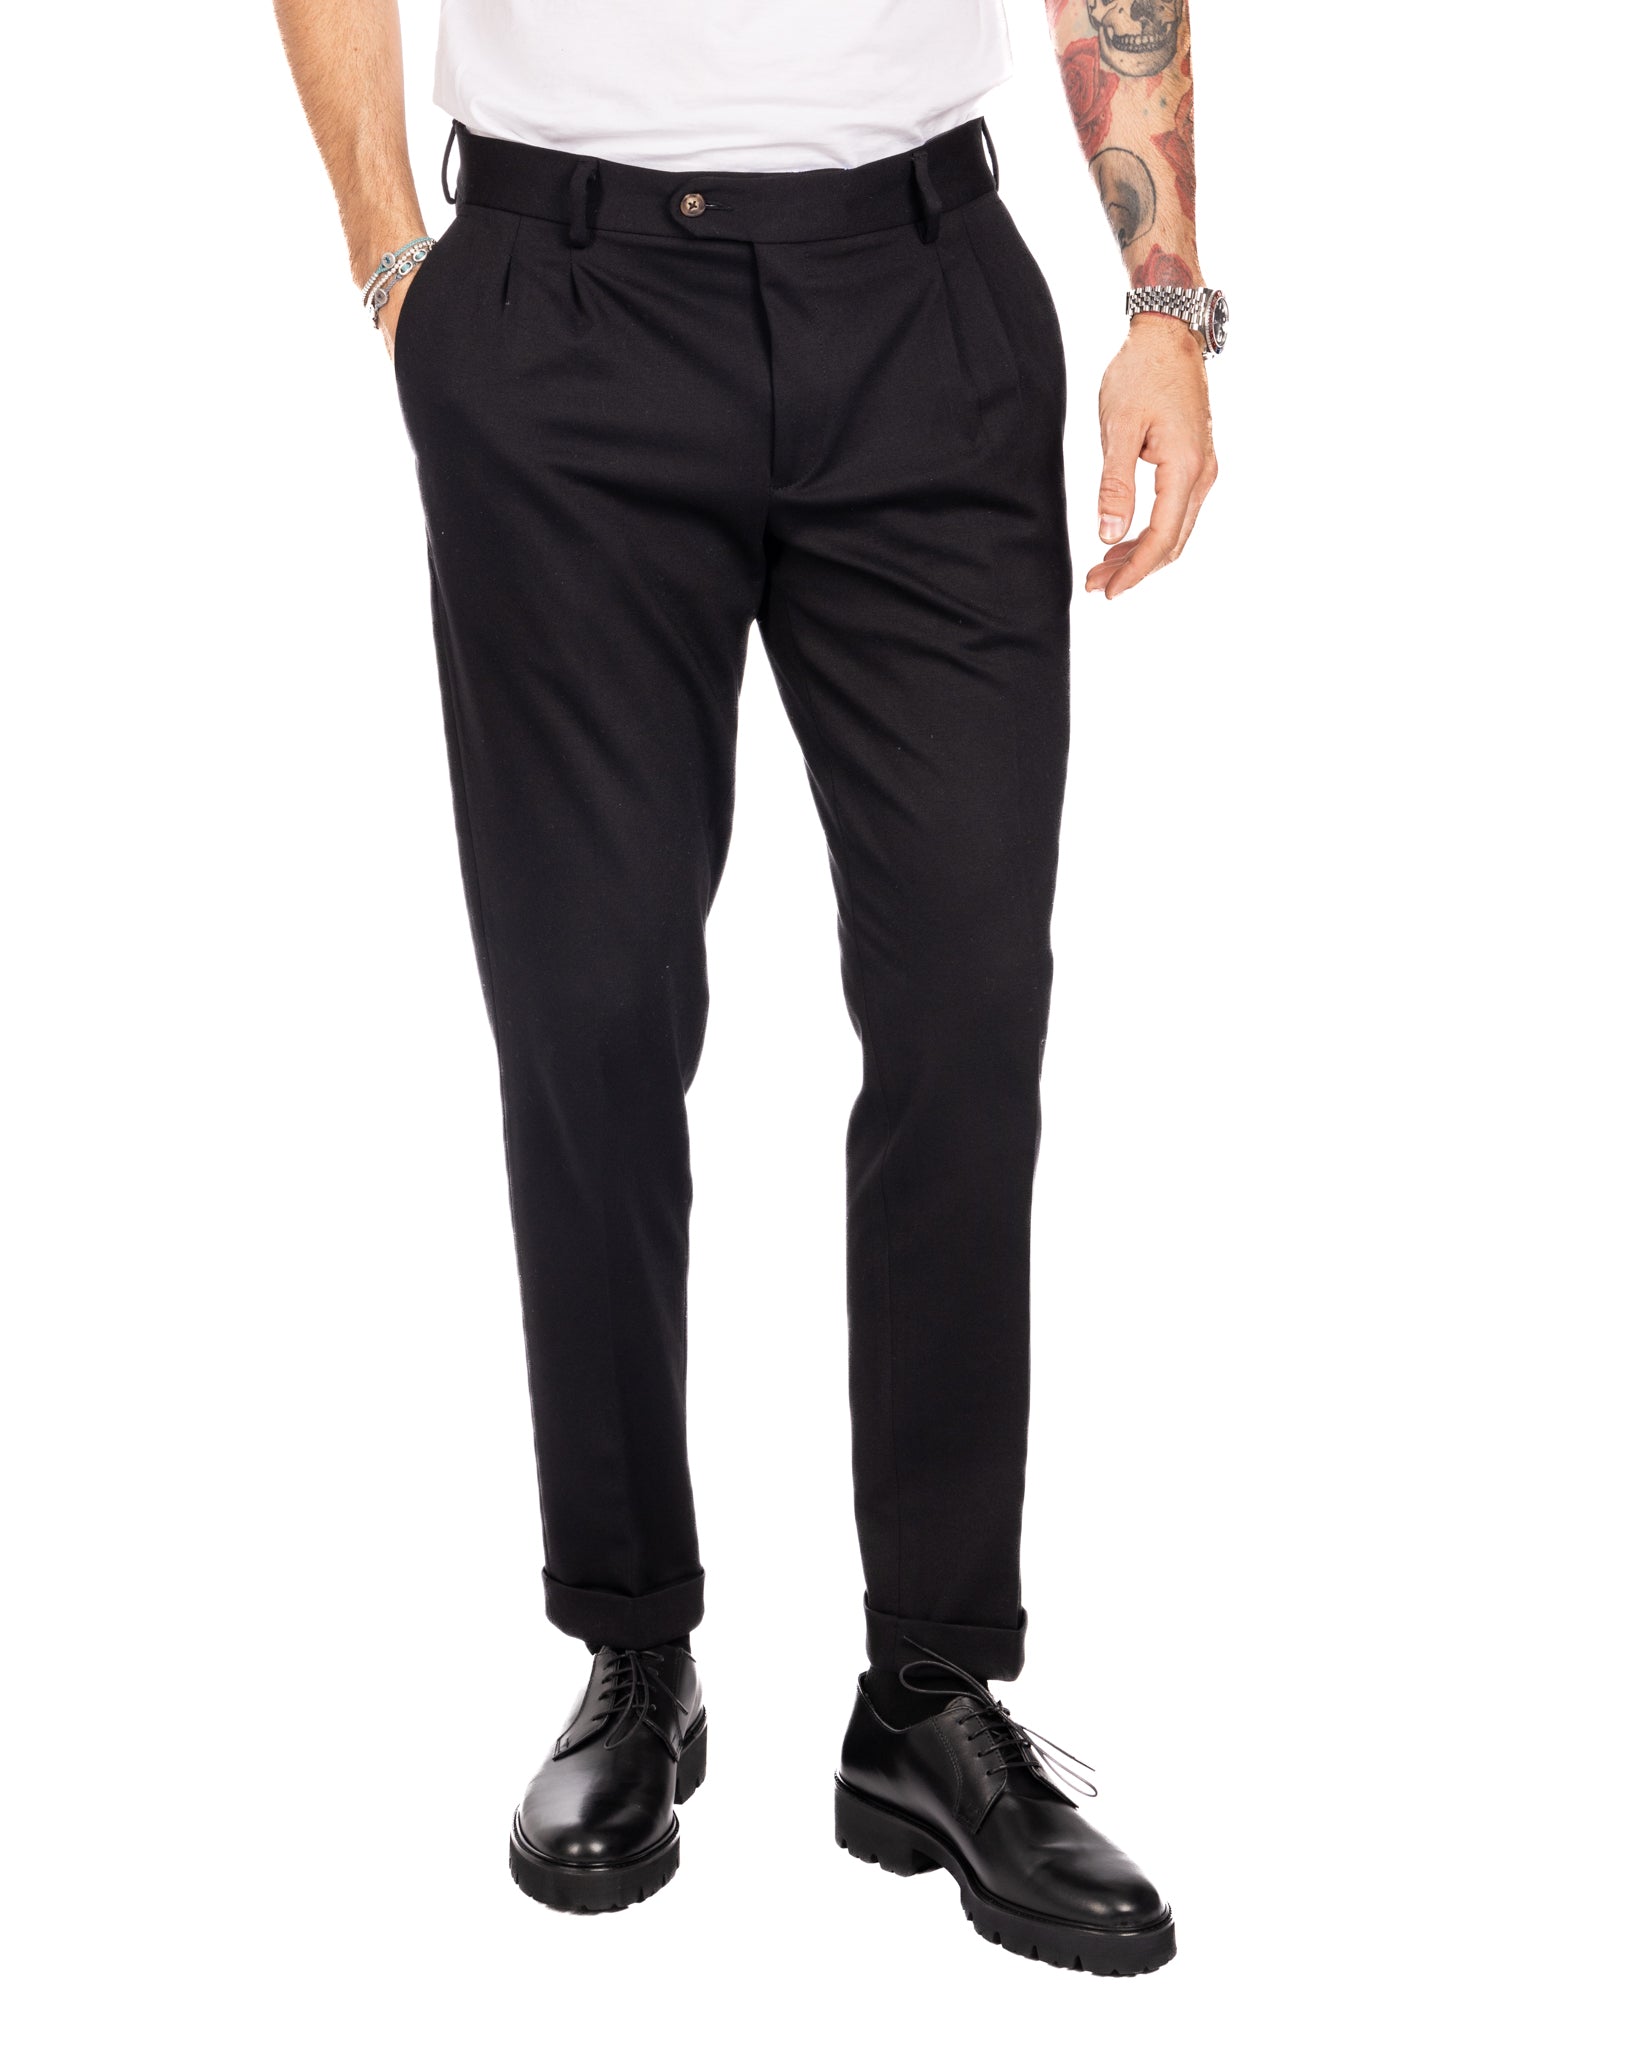 Thomas - pantalone due pinces nero in punto milano